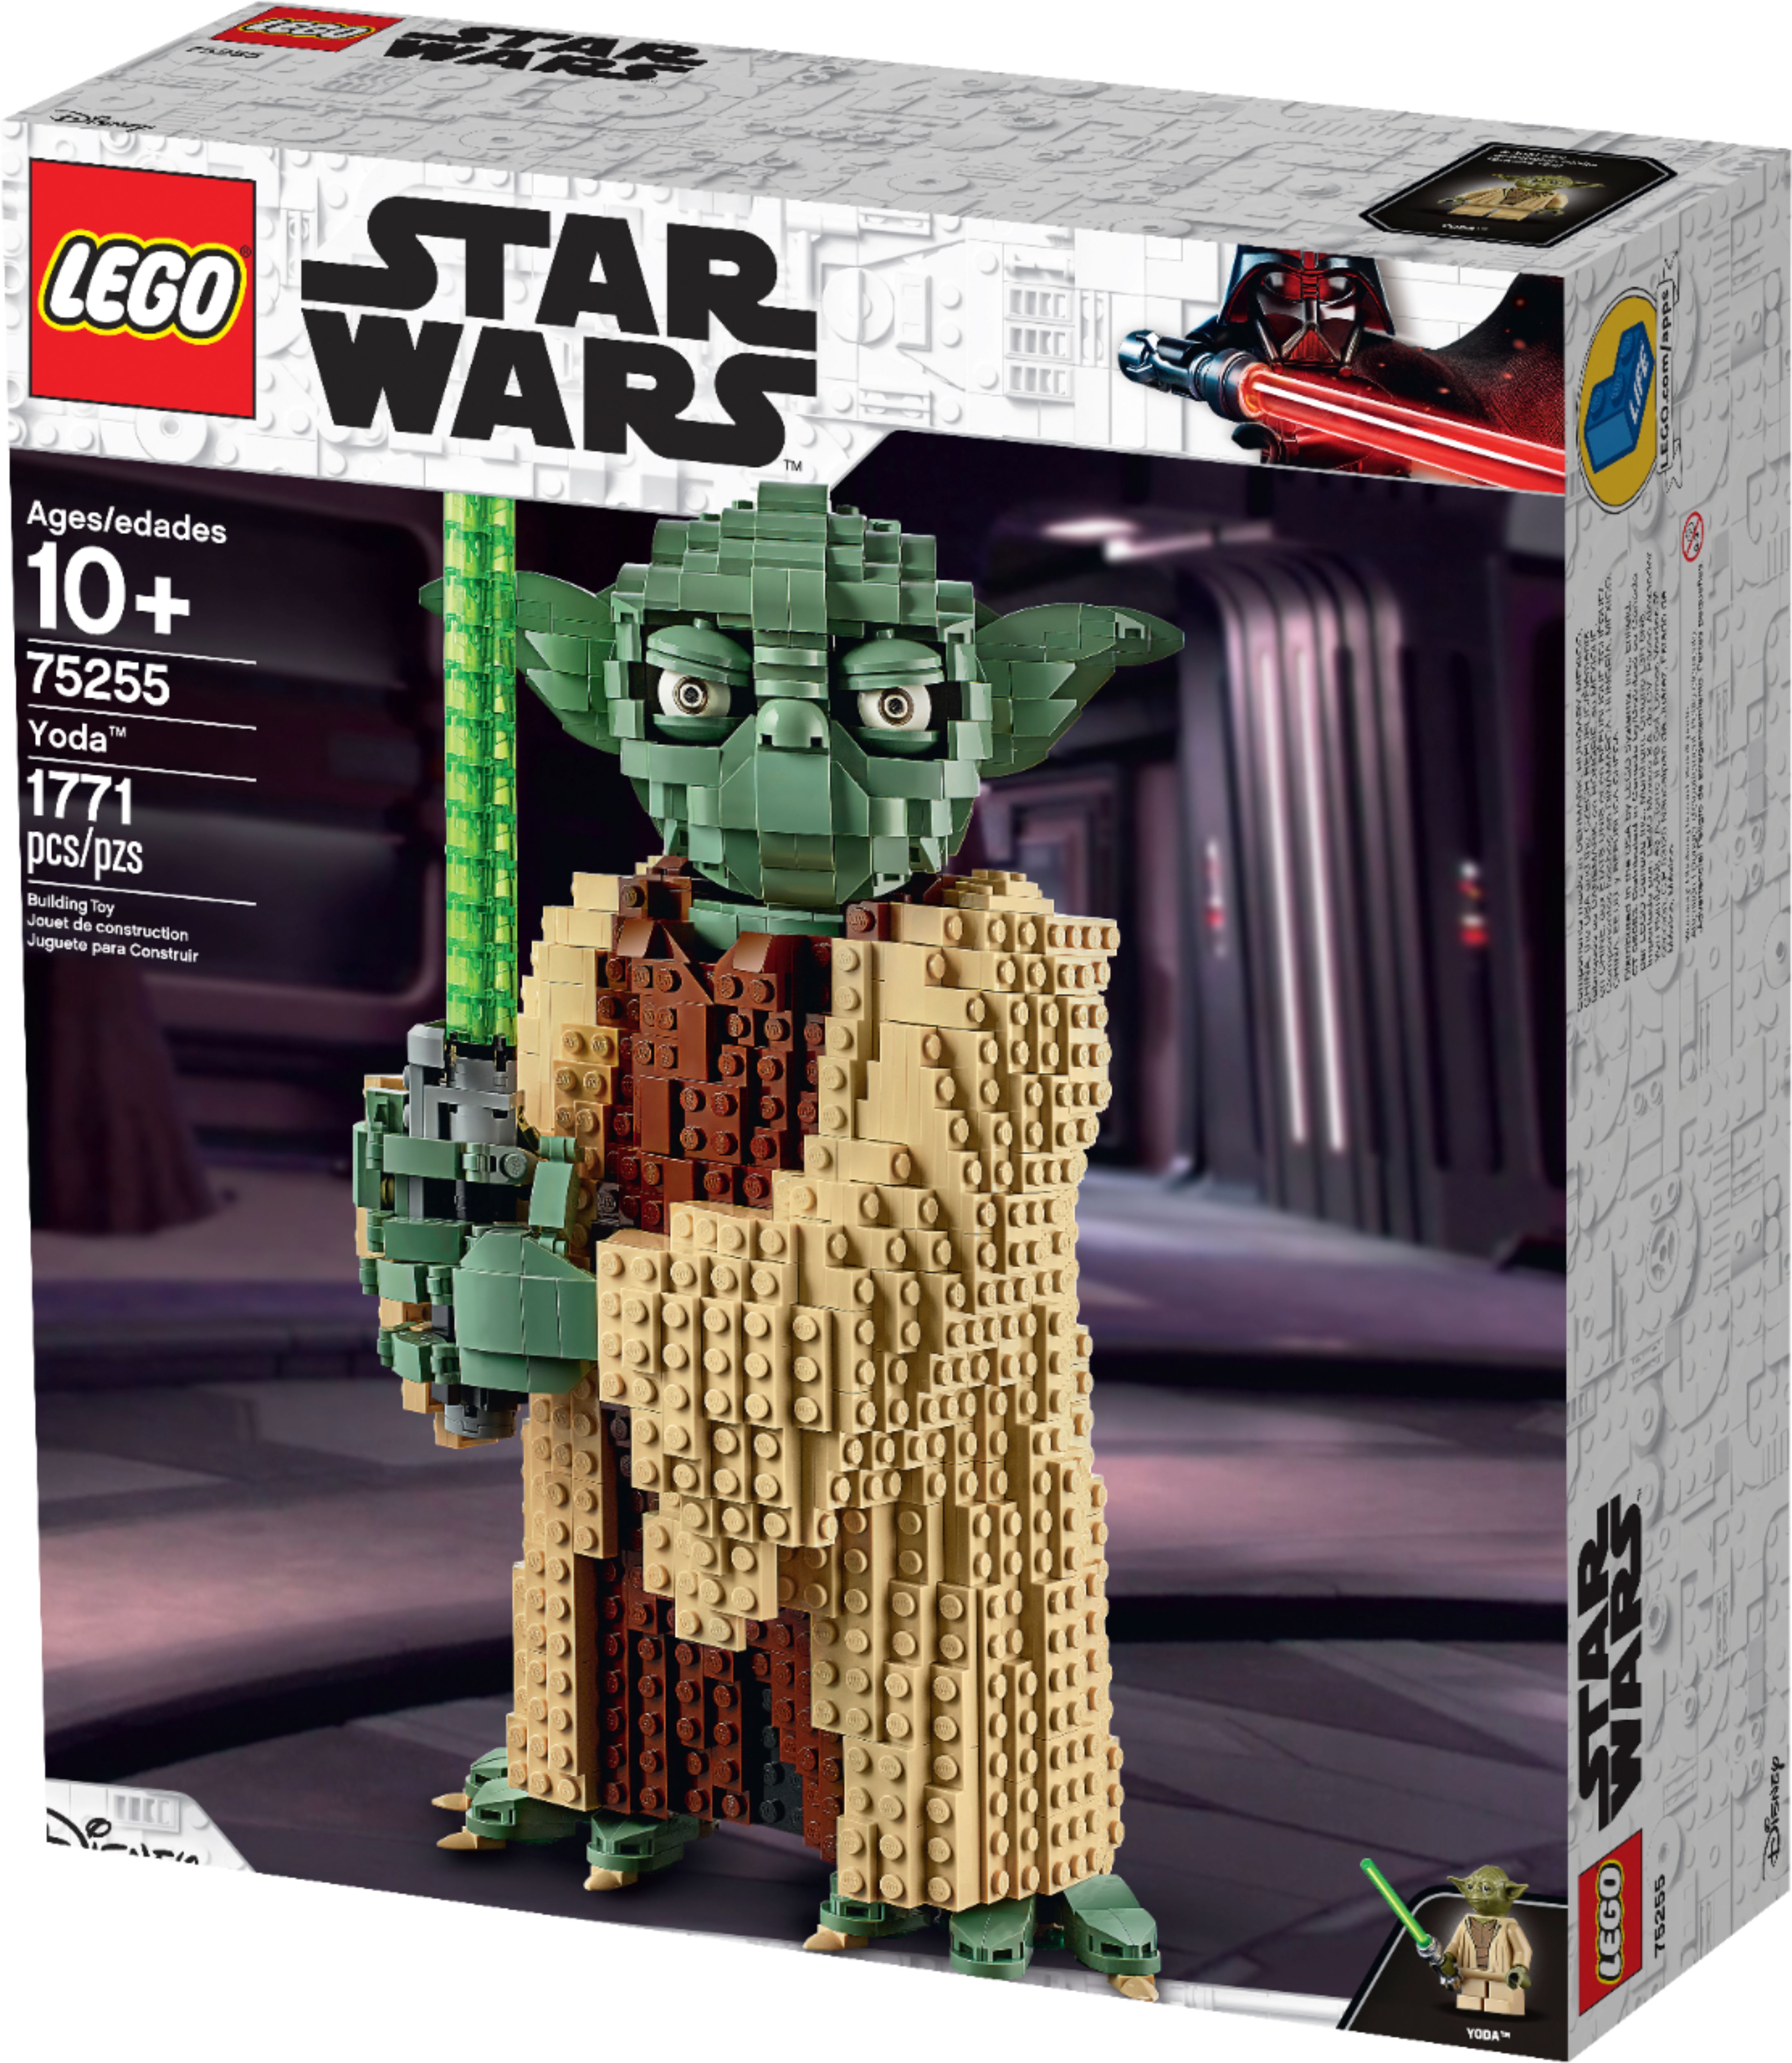 Copyright Veil opener Best Buy: LEGO Star Wars Yoda 75255 6251762